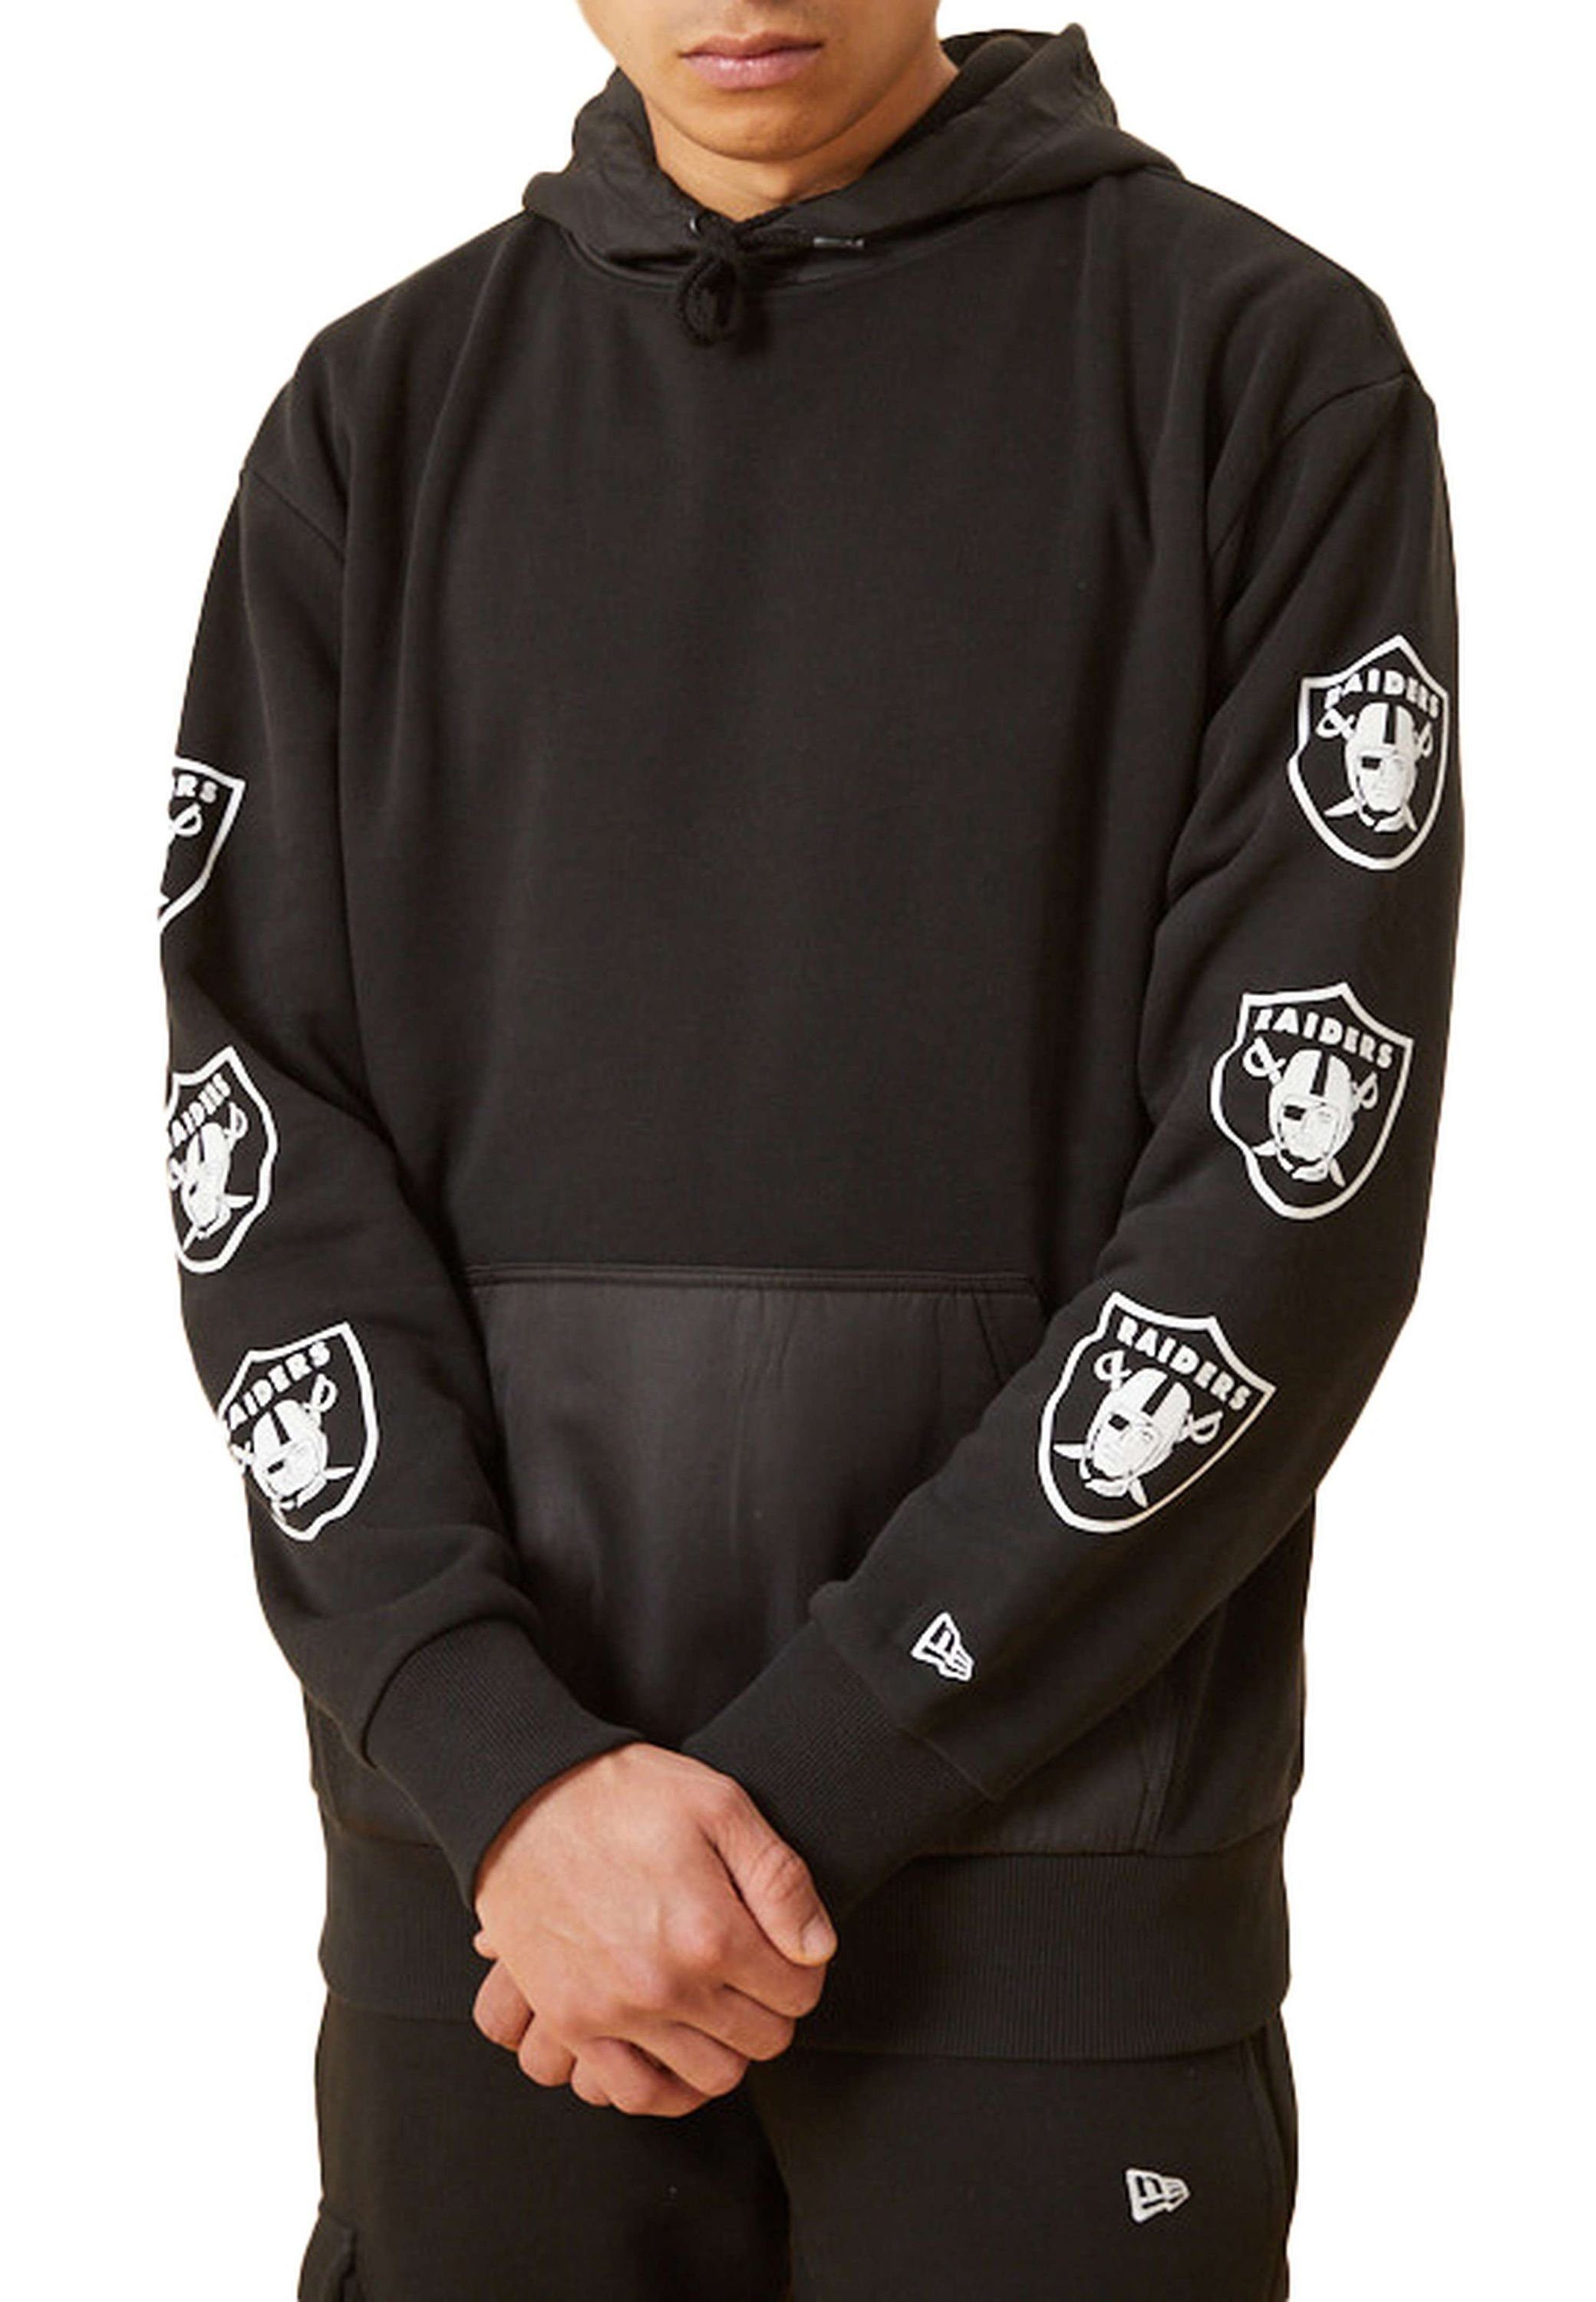 New Sleeve Las Hoodie Distressed Era Vegas Print NFL Raiders